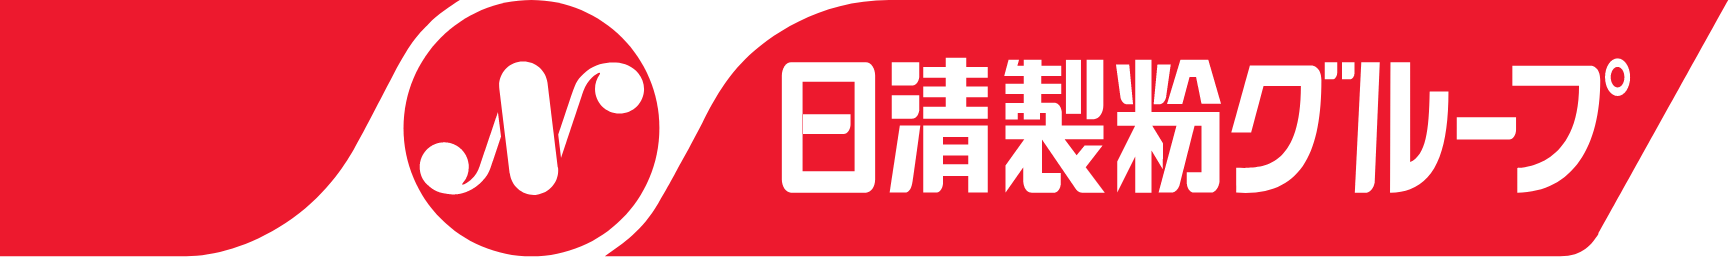 Nisshin Seifun Group
 logo large (transparent PNG)